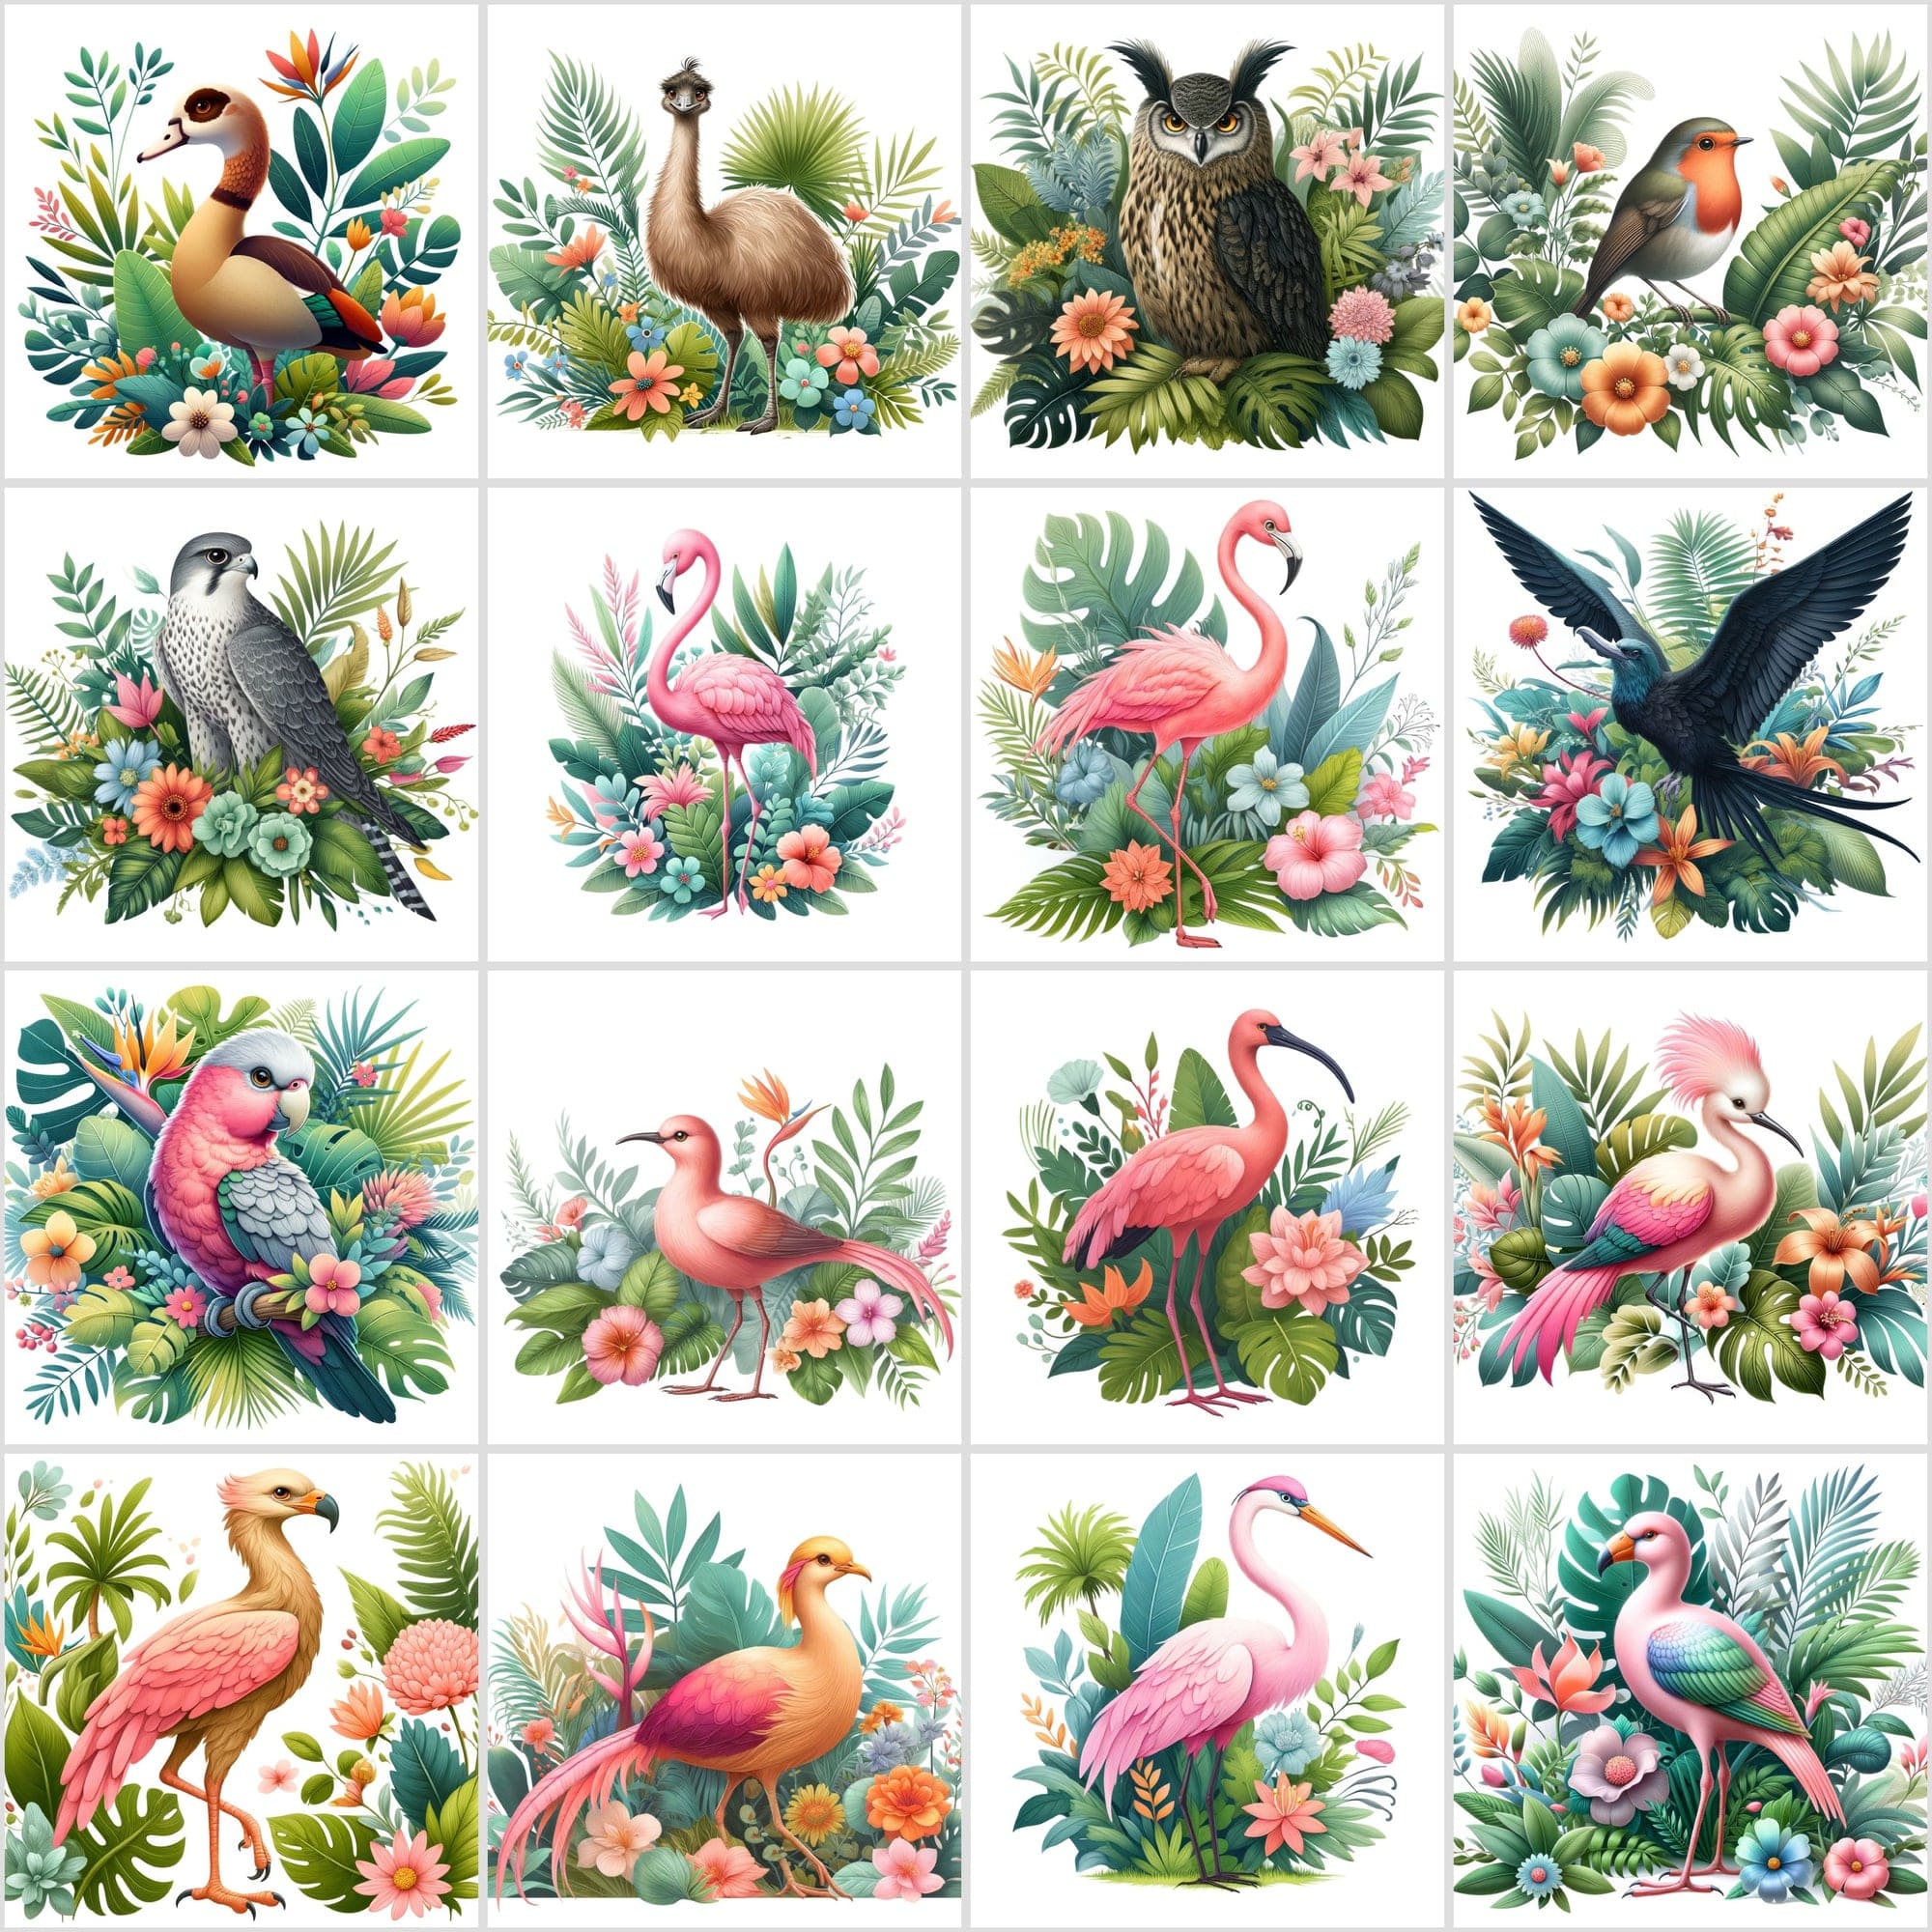 Whimsical Birds in Paradise: 130 Digital Illustrations of Tropical Elegance Digital Download Sumobundle